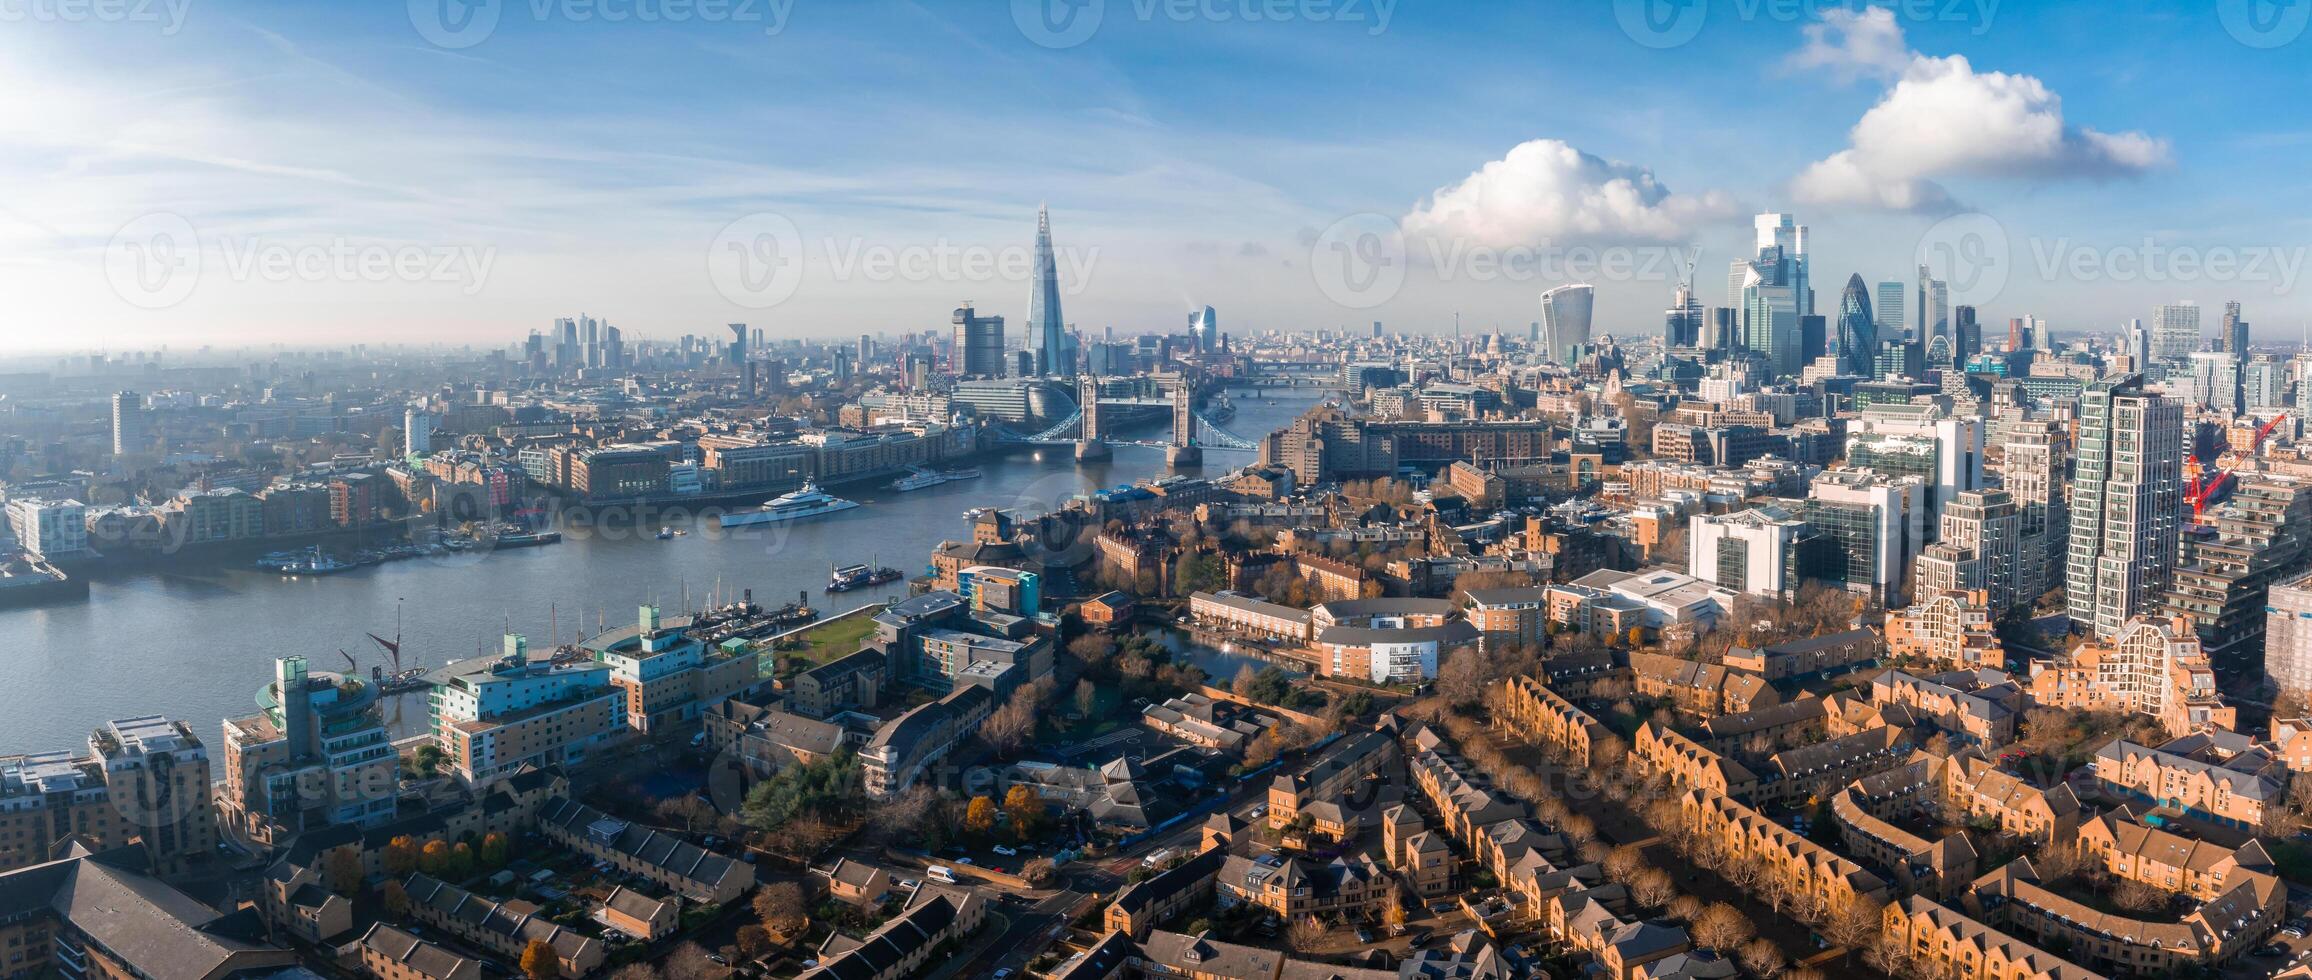 antenn se av de ikoniska torn bro ansluter london med southwark foto